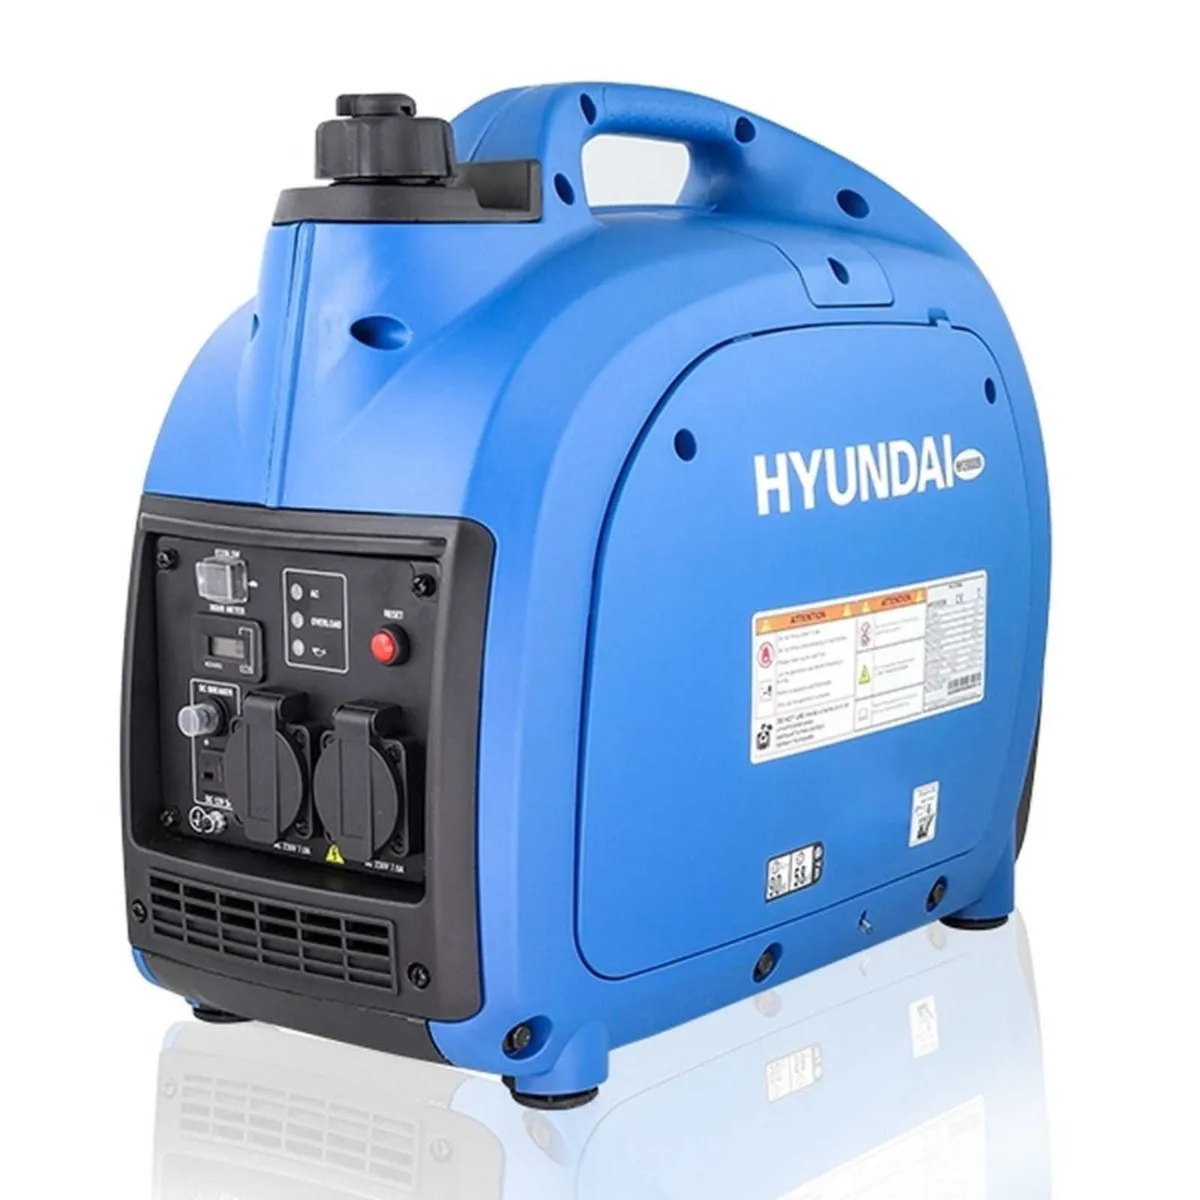 Hyundai 2000w Portable Petrol Inverter Generator | - Image 1